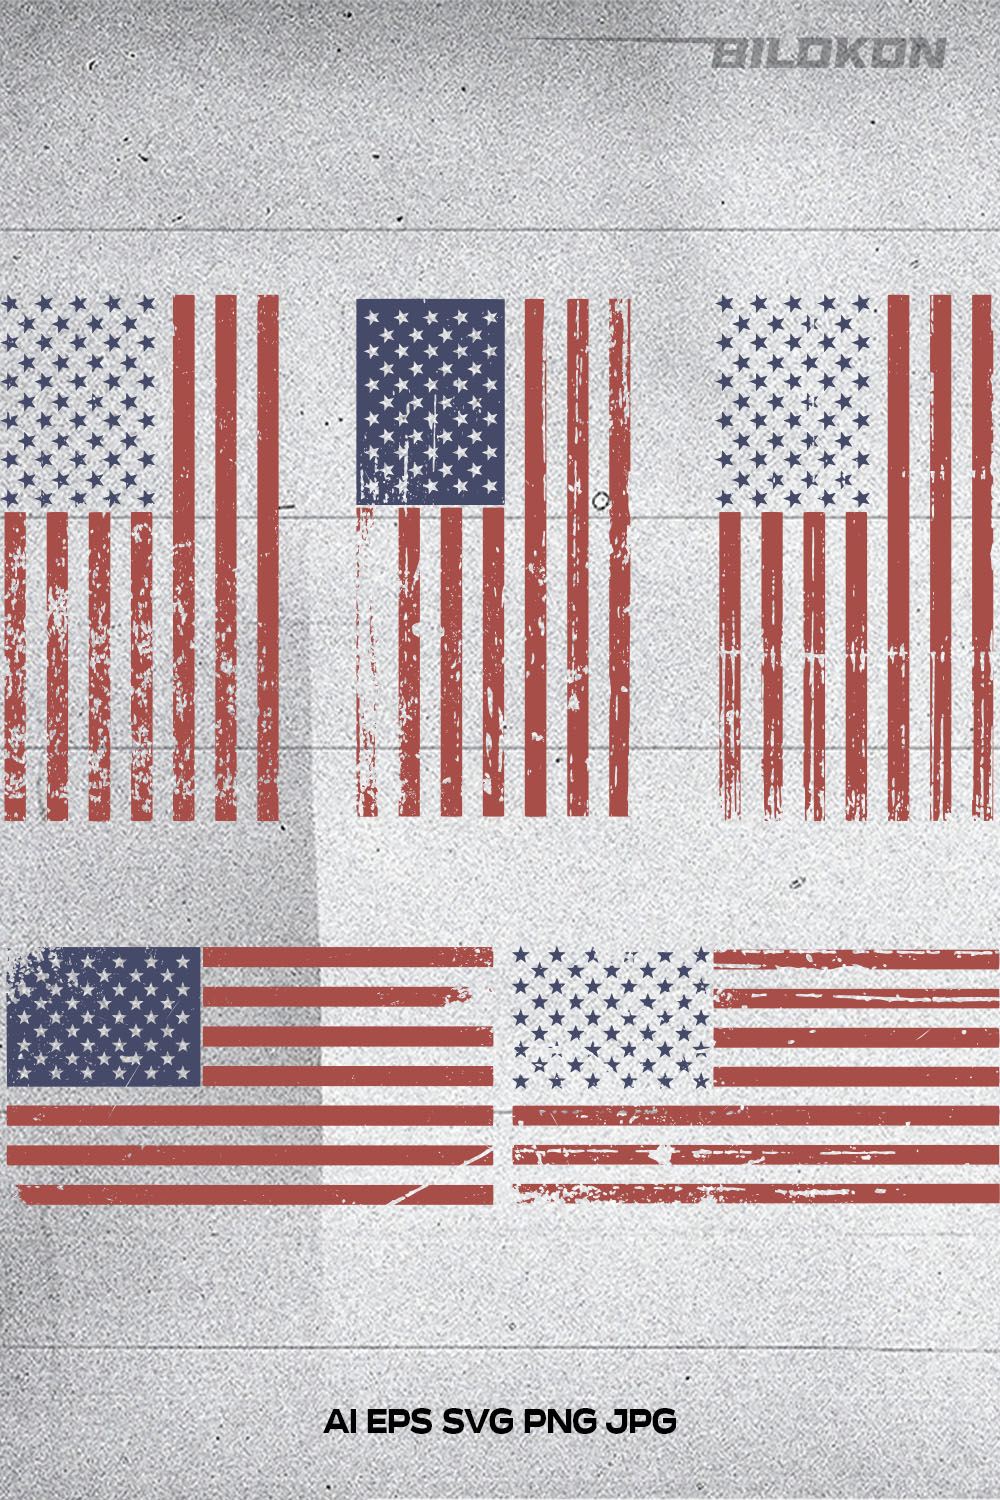 Grunge American flag, USA flag, SVG Vector pinterest preview image.